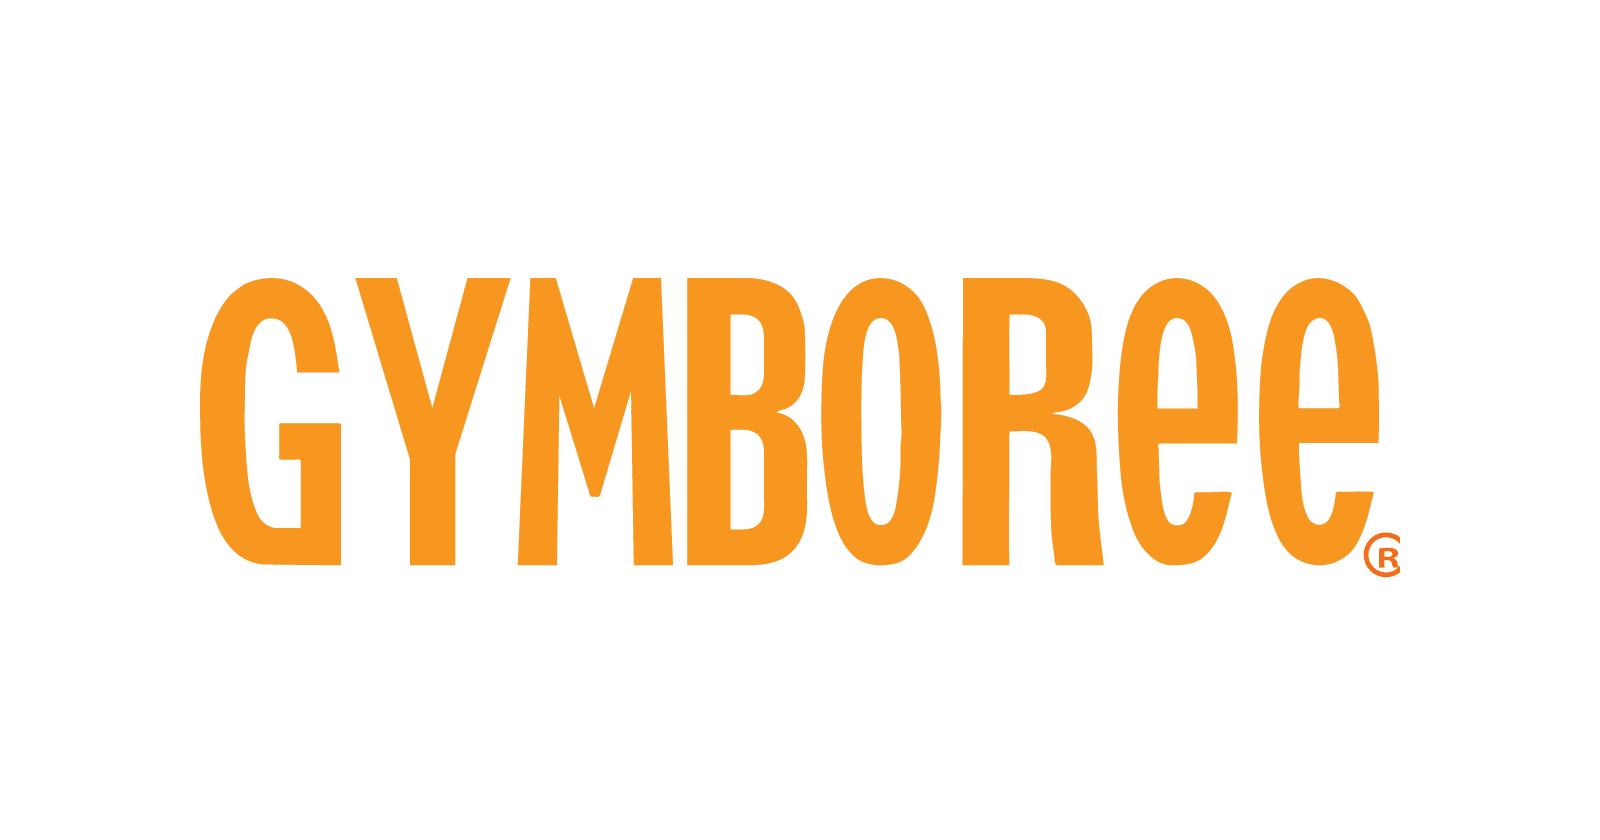 gymboree-logo